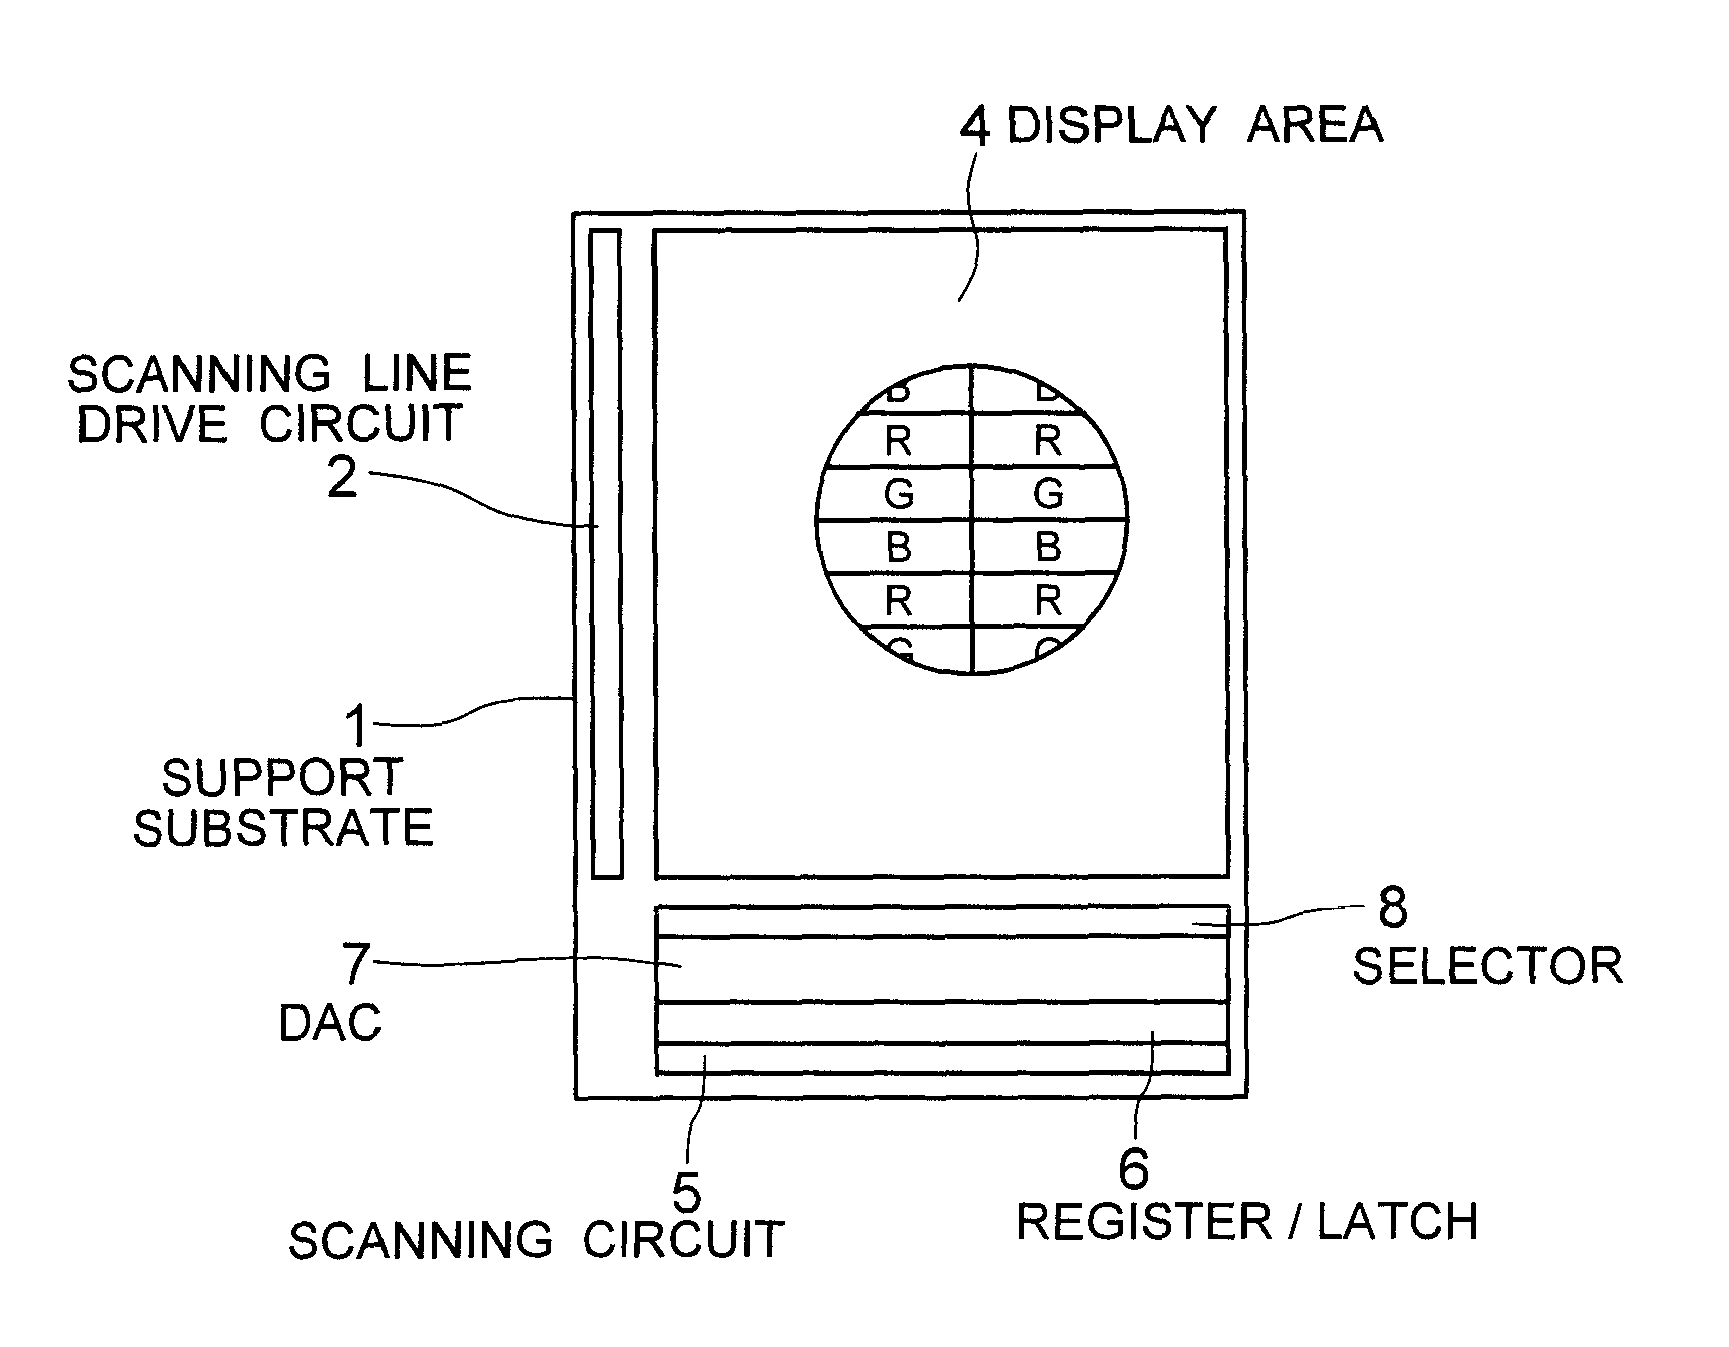 Display apparatus